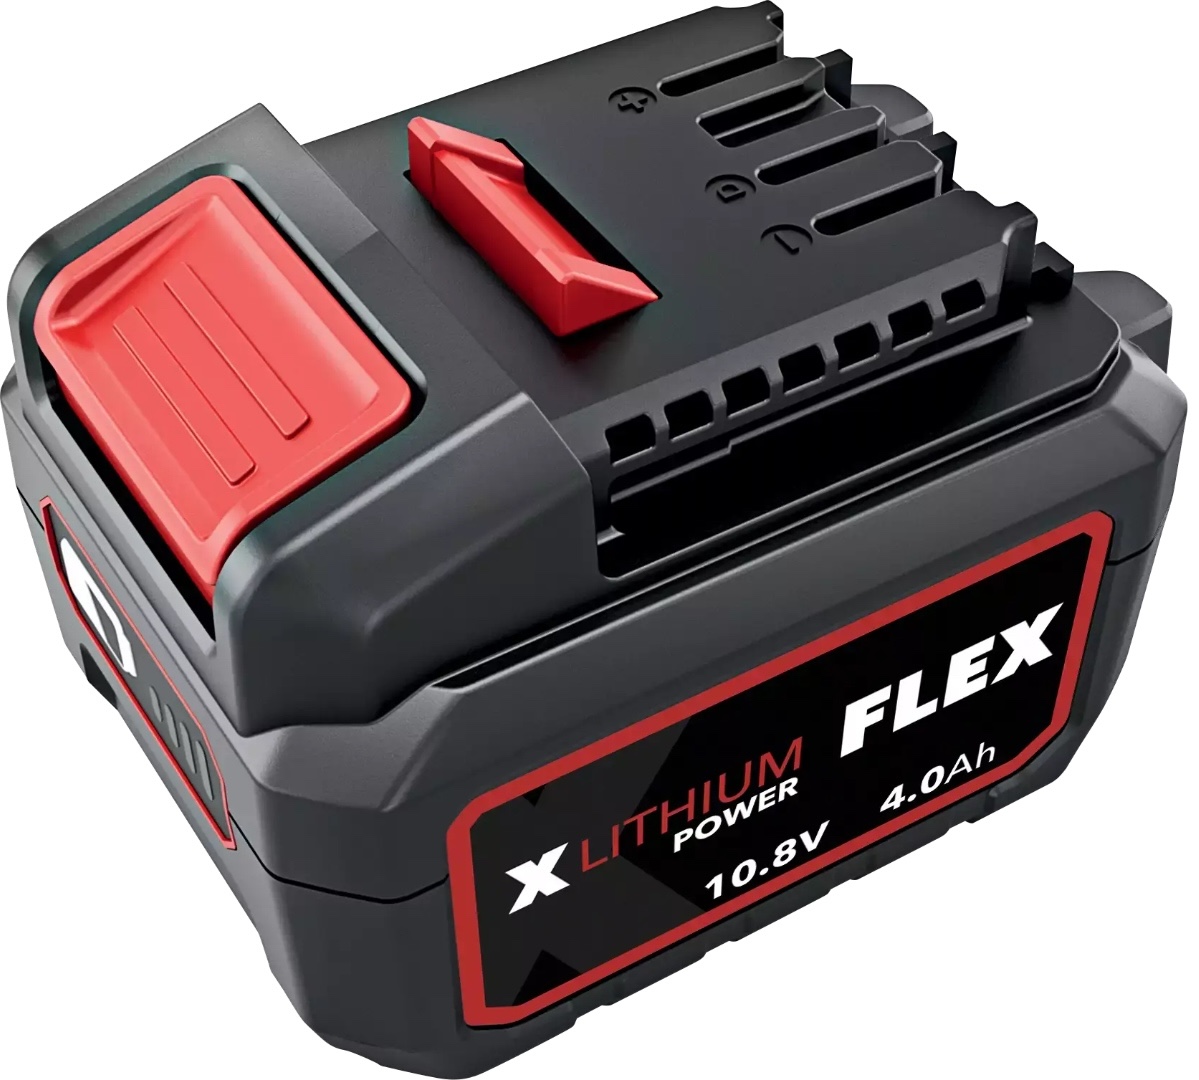 Аккумулятор Flex AP 10.8 / 4.0 Li-Ion 439657 внешний аккумулятор luazon pb 05 6000 мач 3 usb 2 а дисплей фонарик